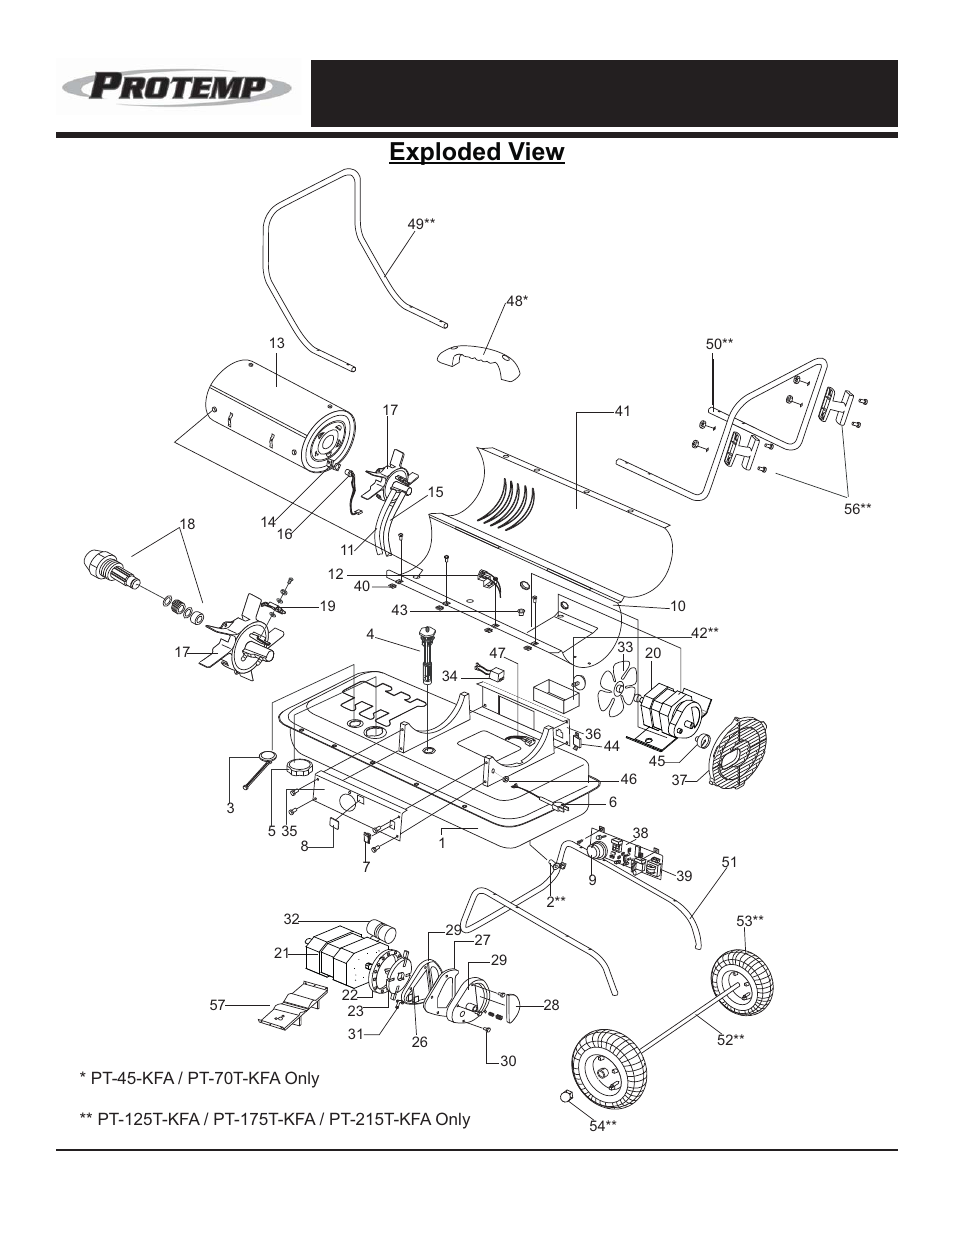 Sorghgu00 9lhz | ProTemp PT-215T-KFA User Manual | Page 14 / 16